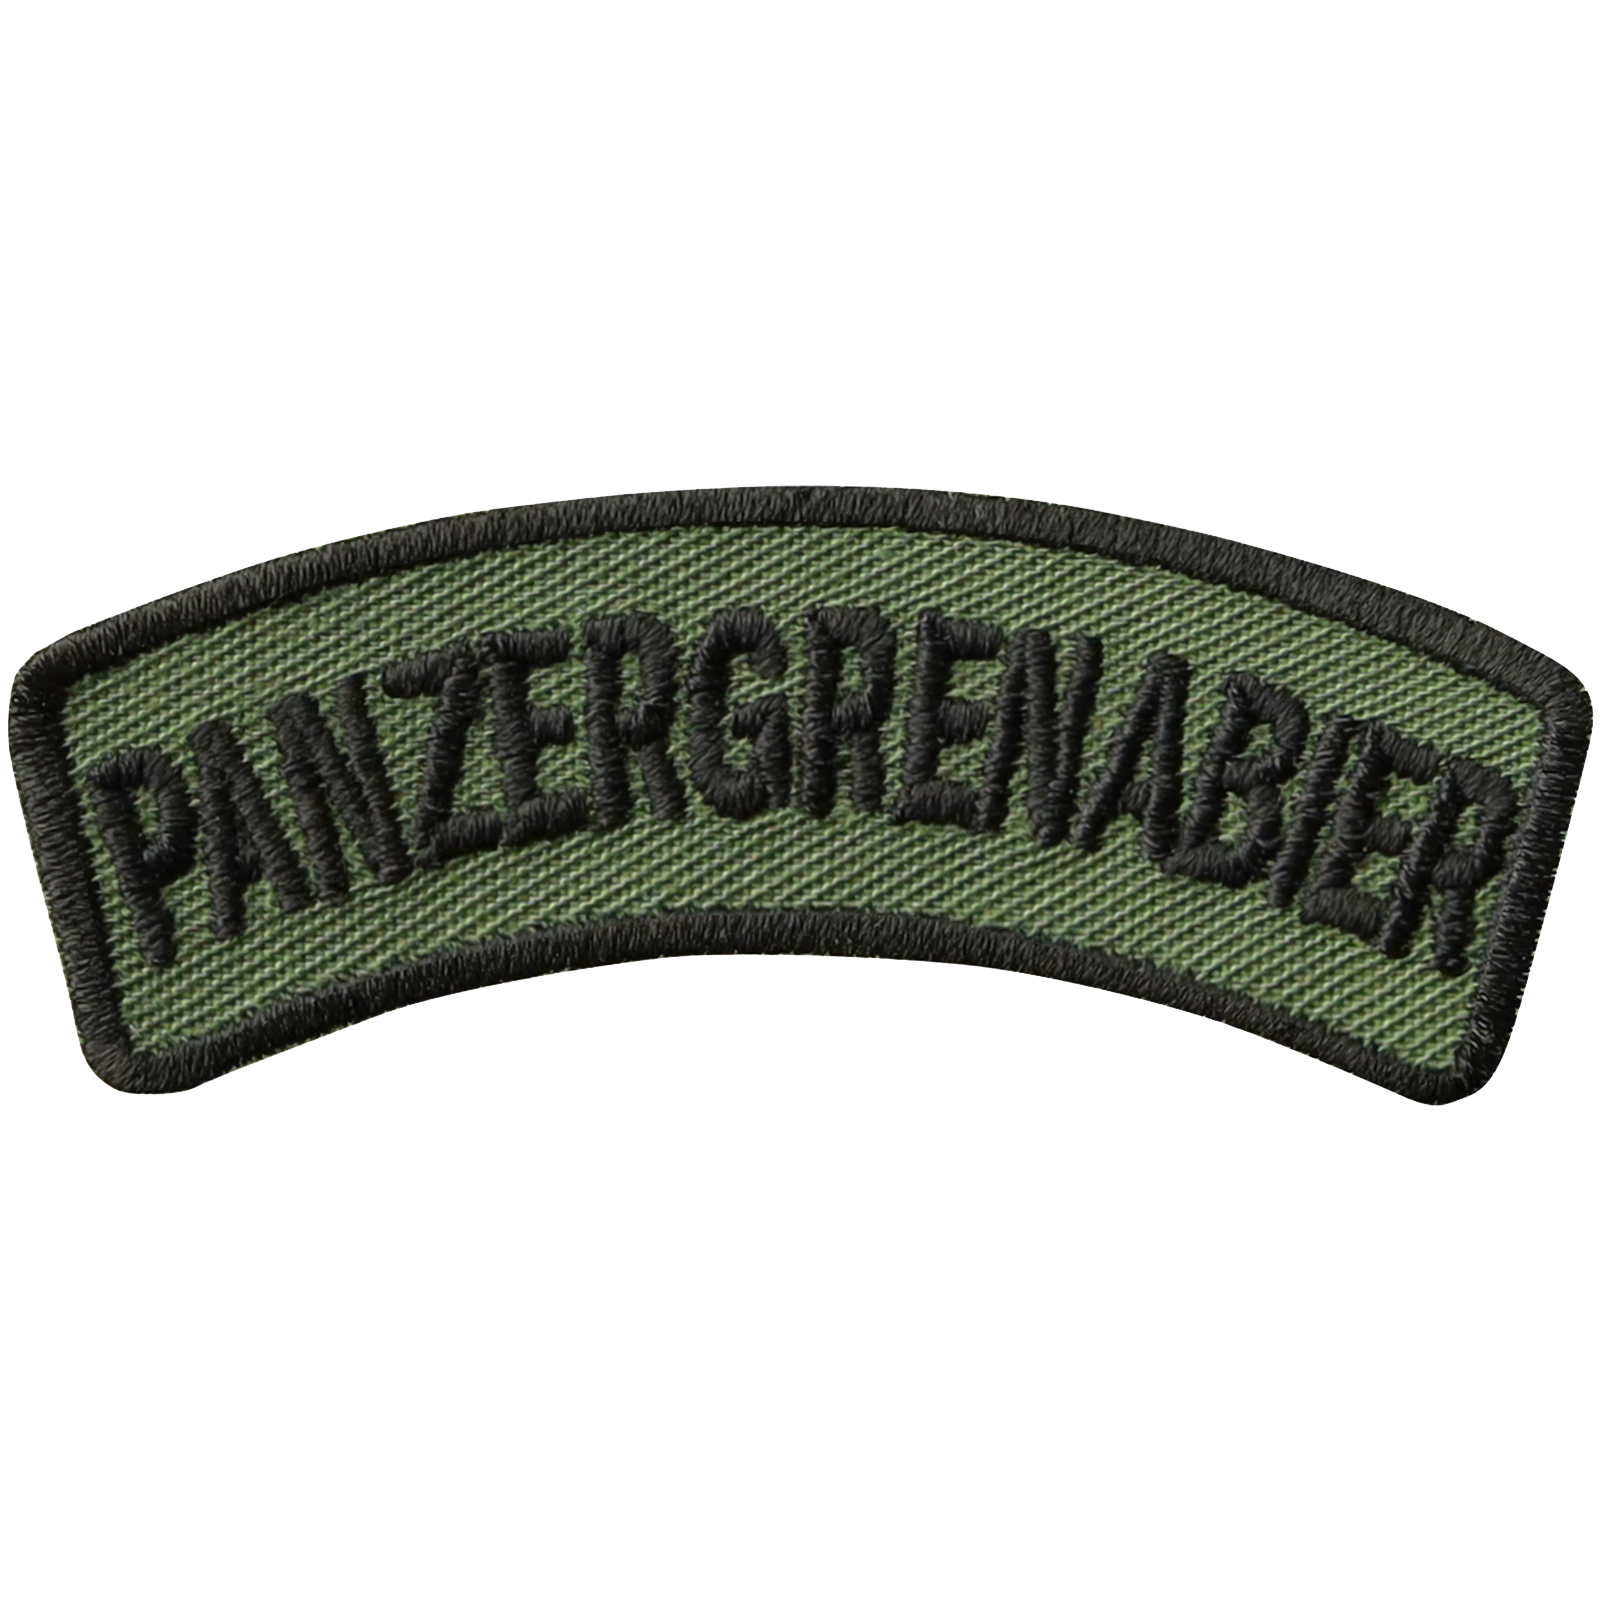 Panzergrenabier - Patch